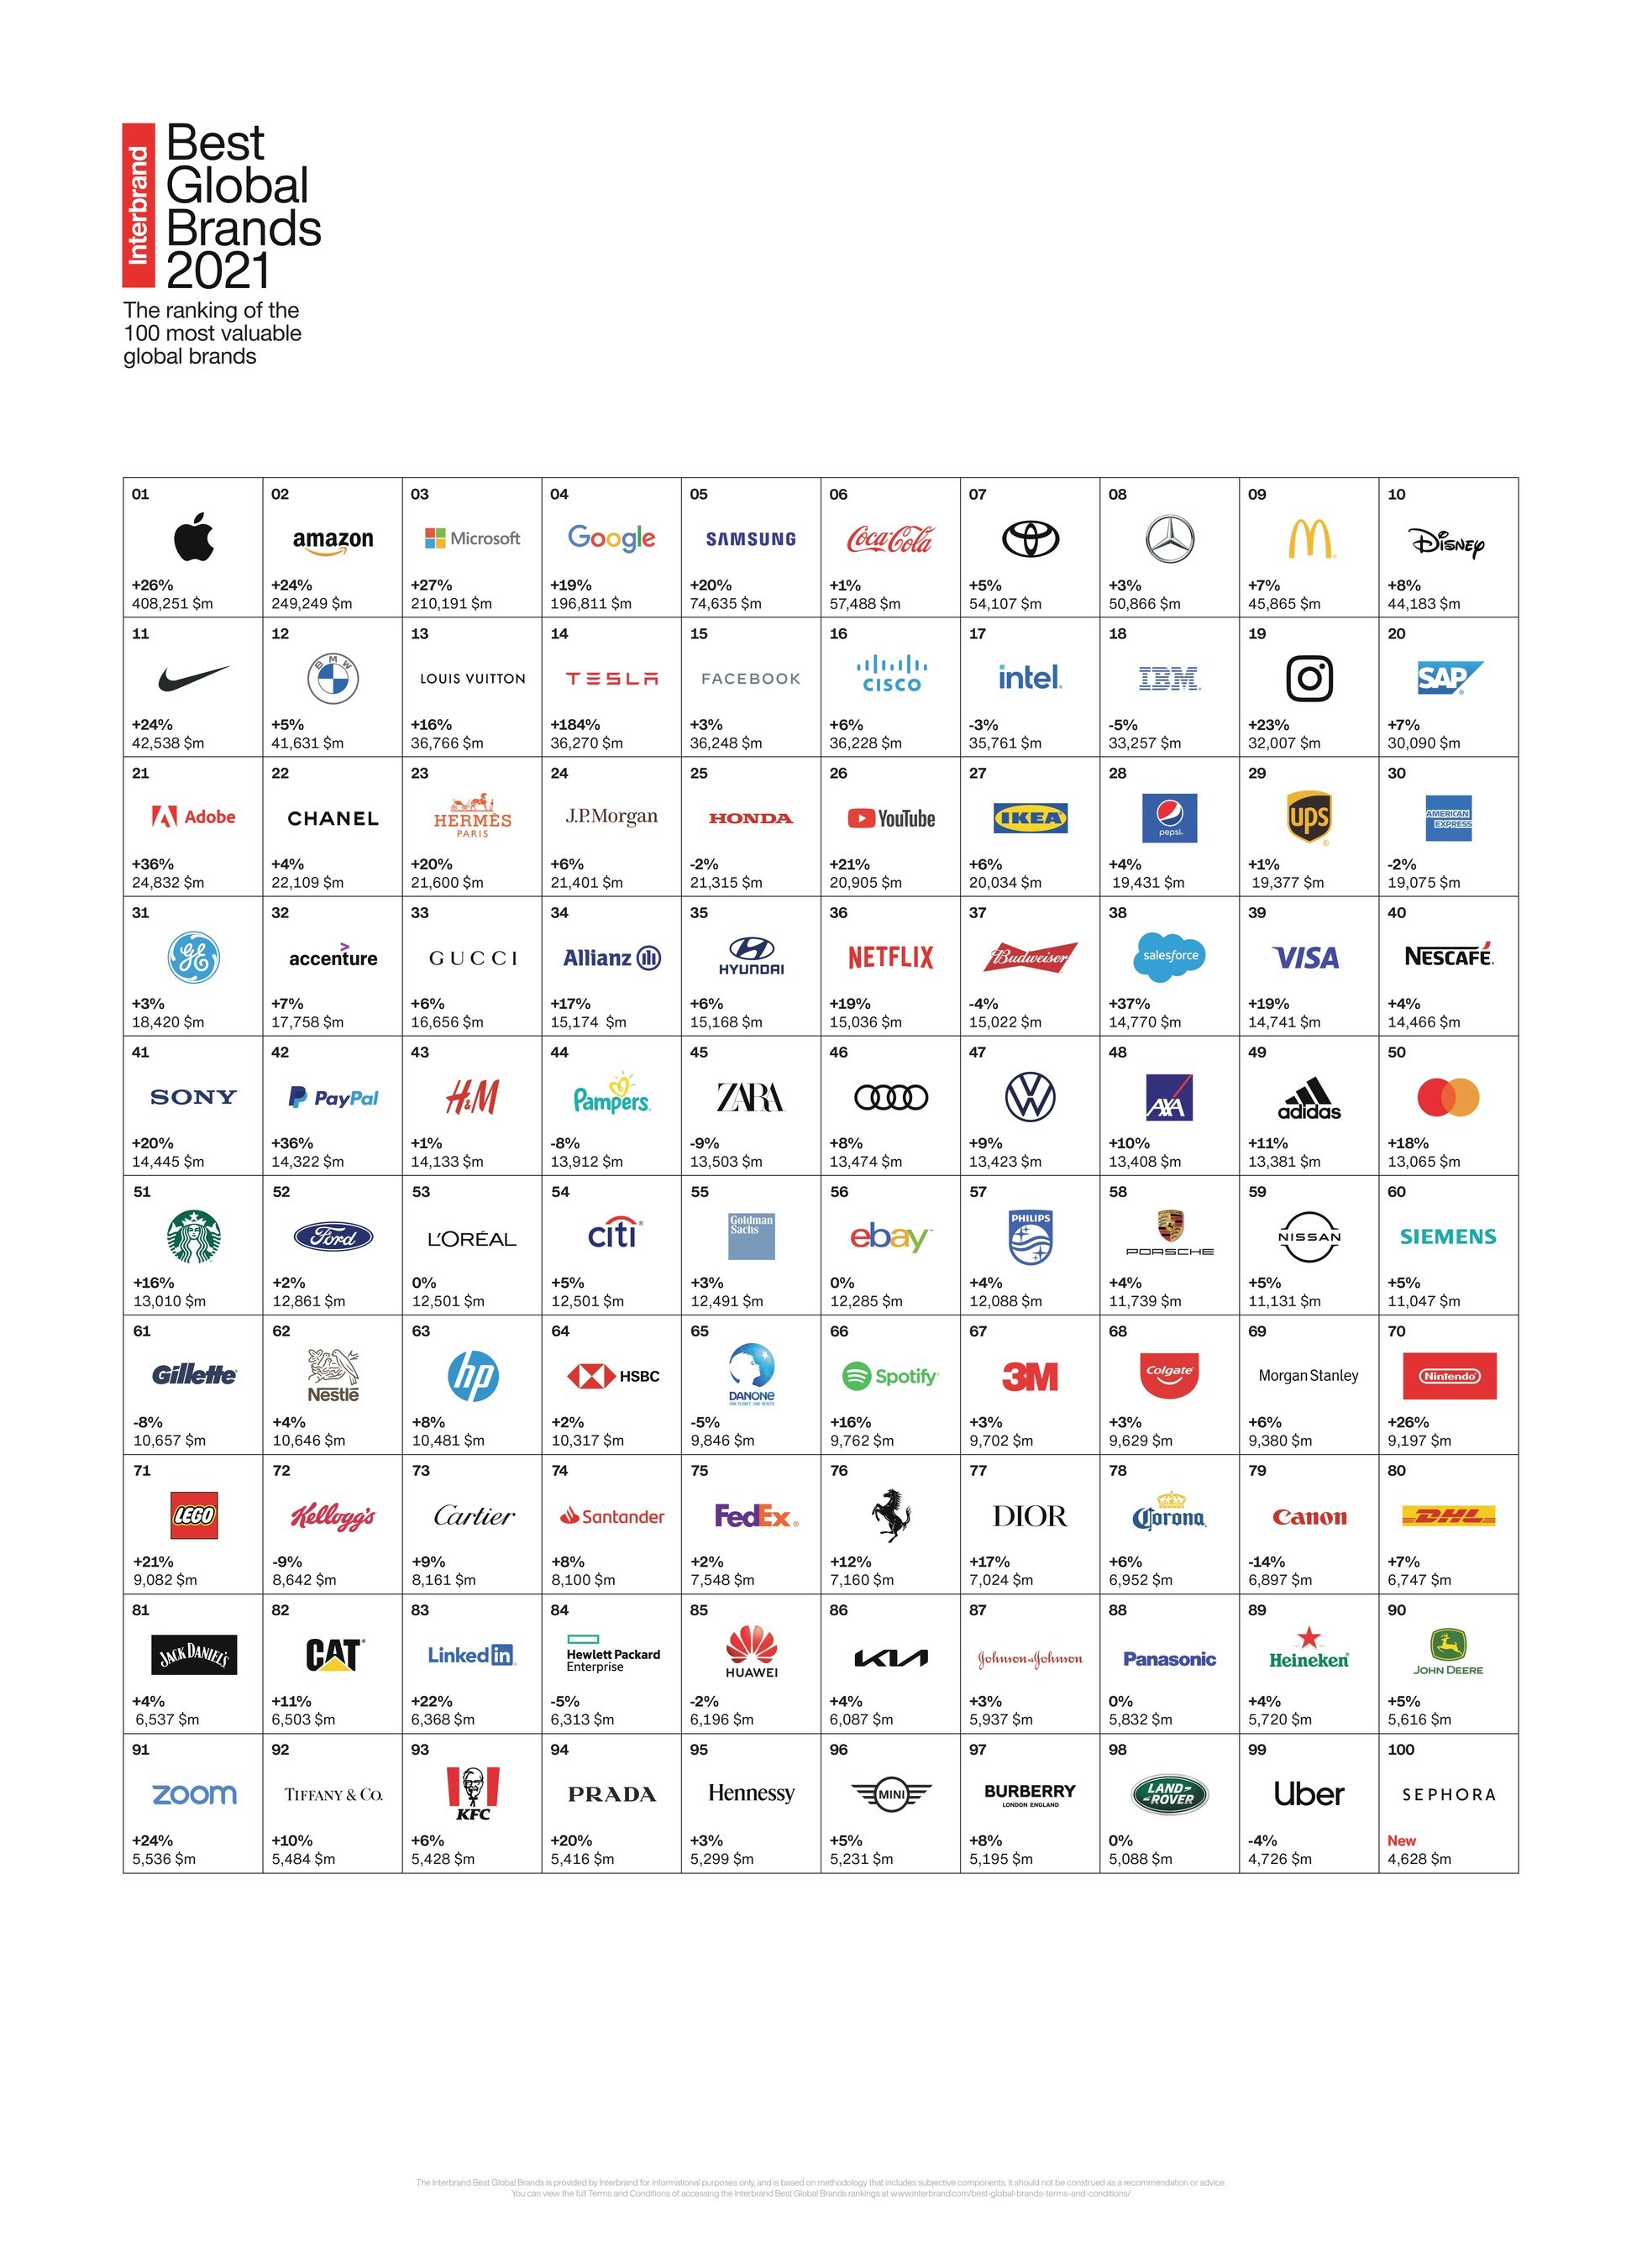 Top Louis Vuitton Competitors & Similar Companies